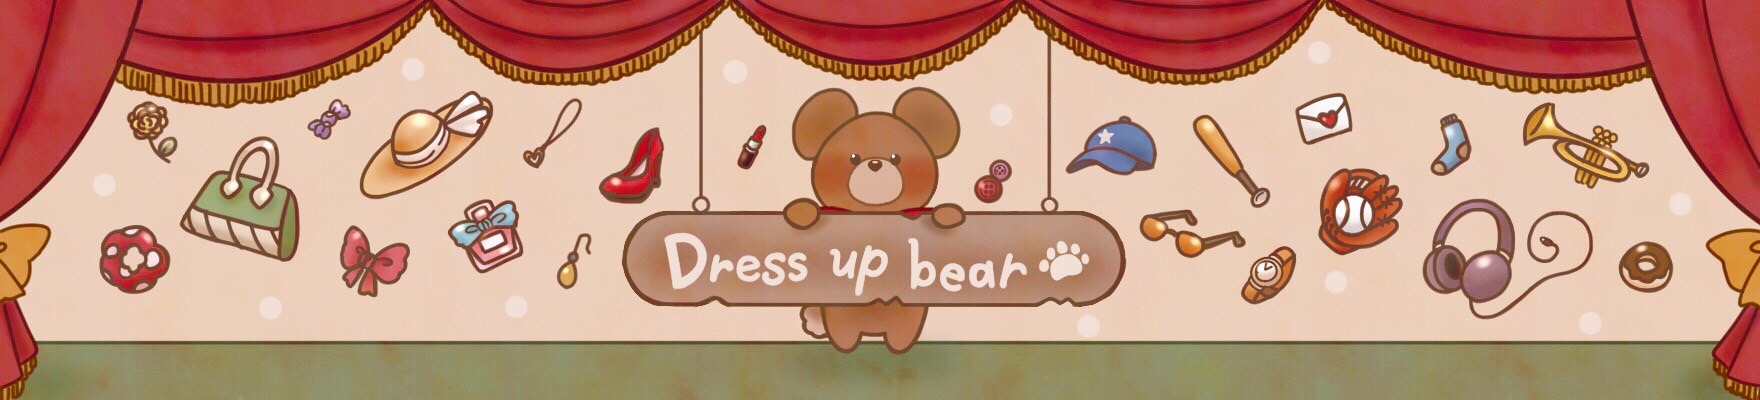 Dress up bear